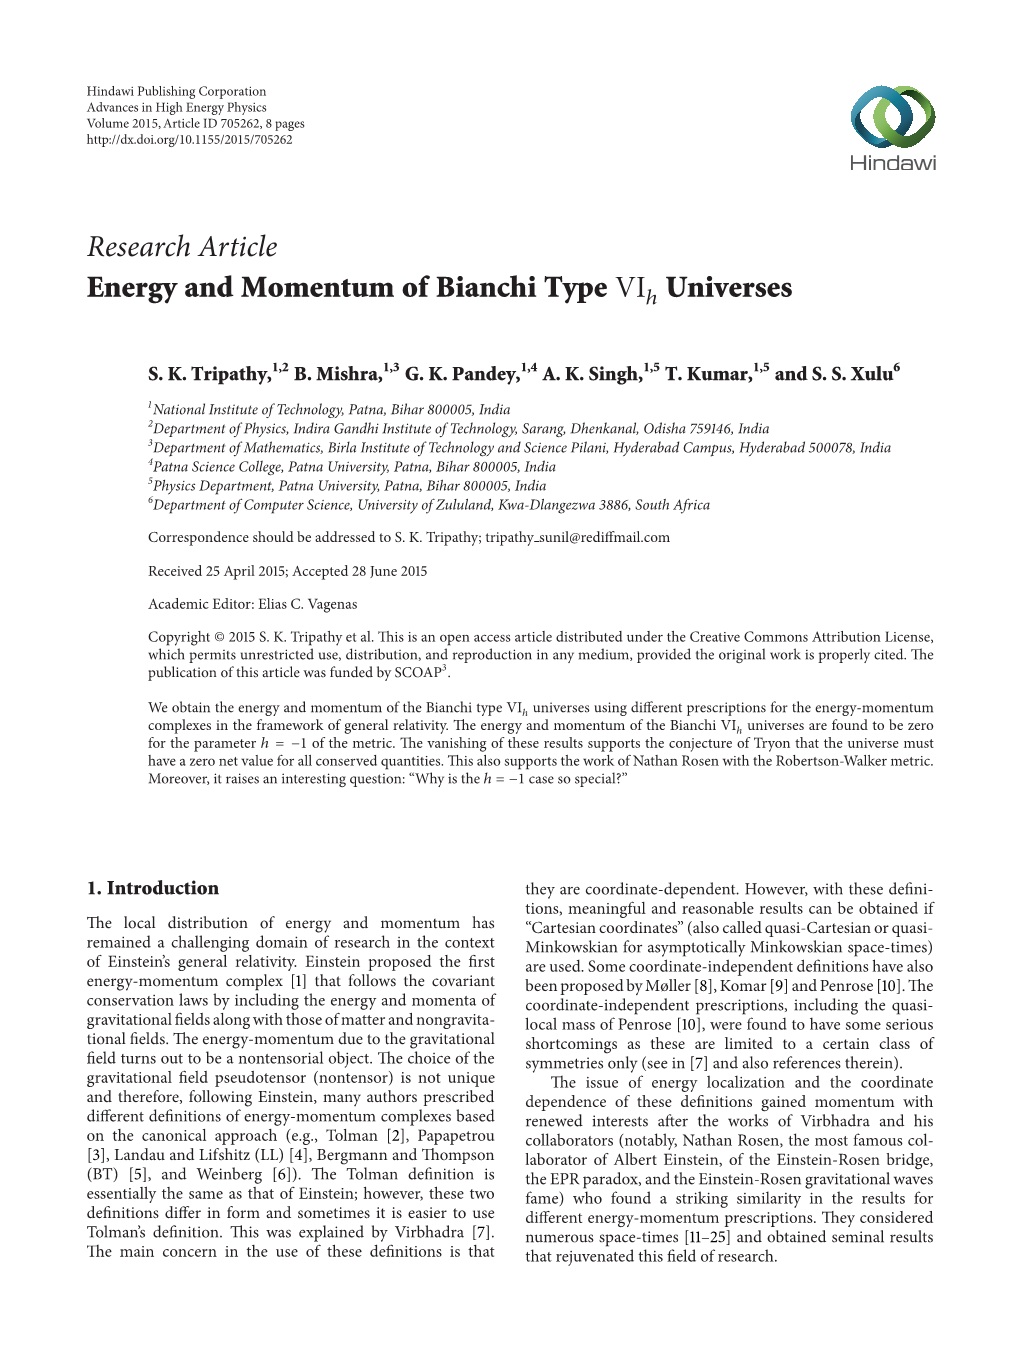 Energy and Momentum of Bianchi Type Universes